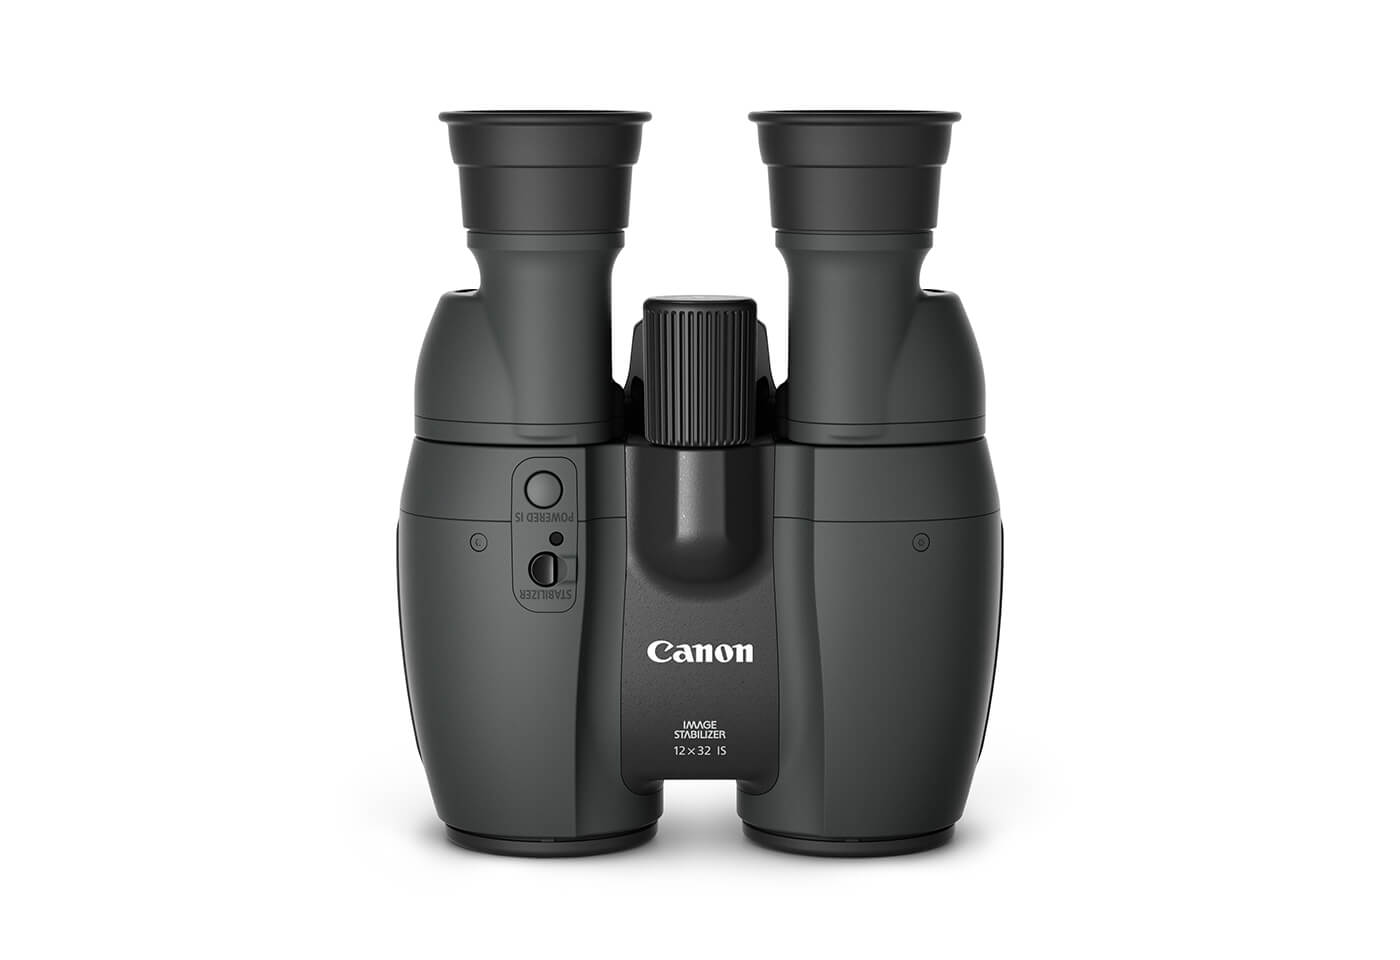 Canon 12x32 binoculars front image